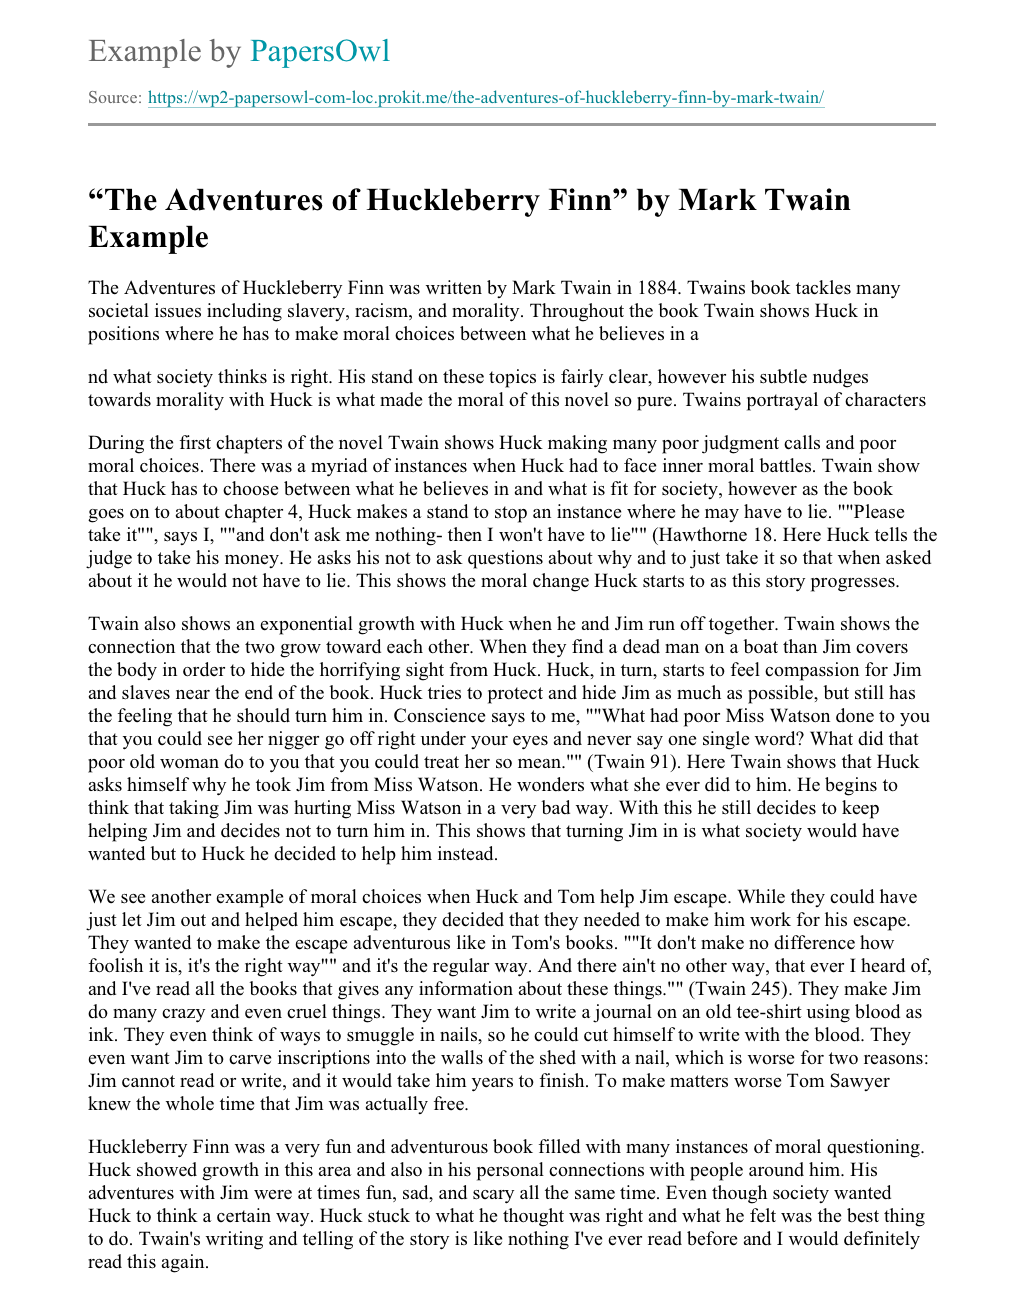 Huckleberry finn essay